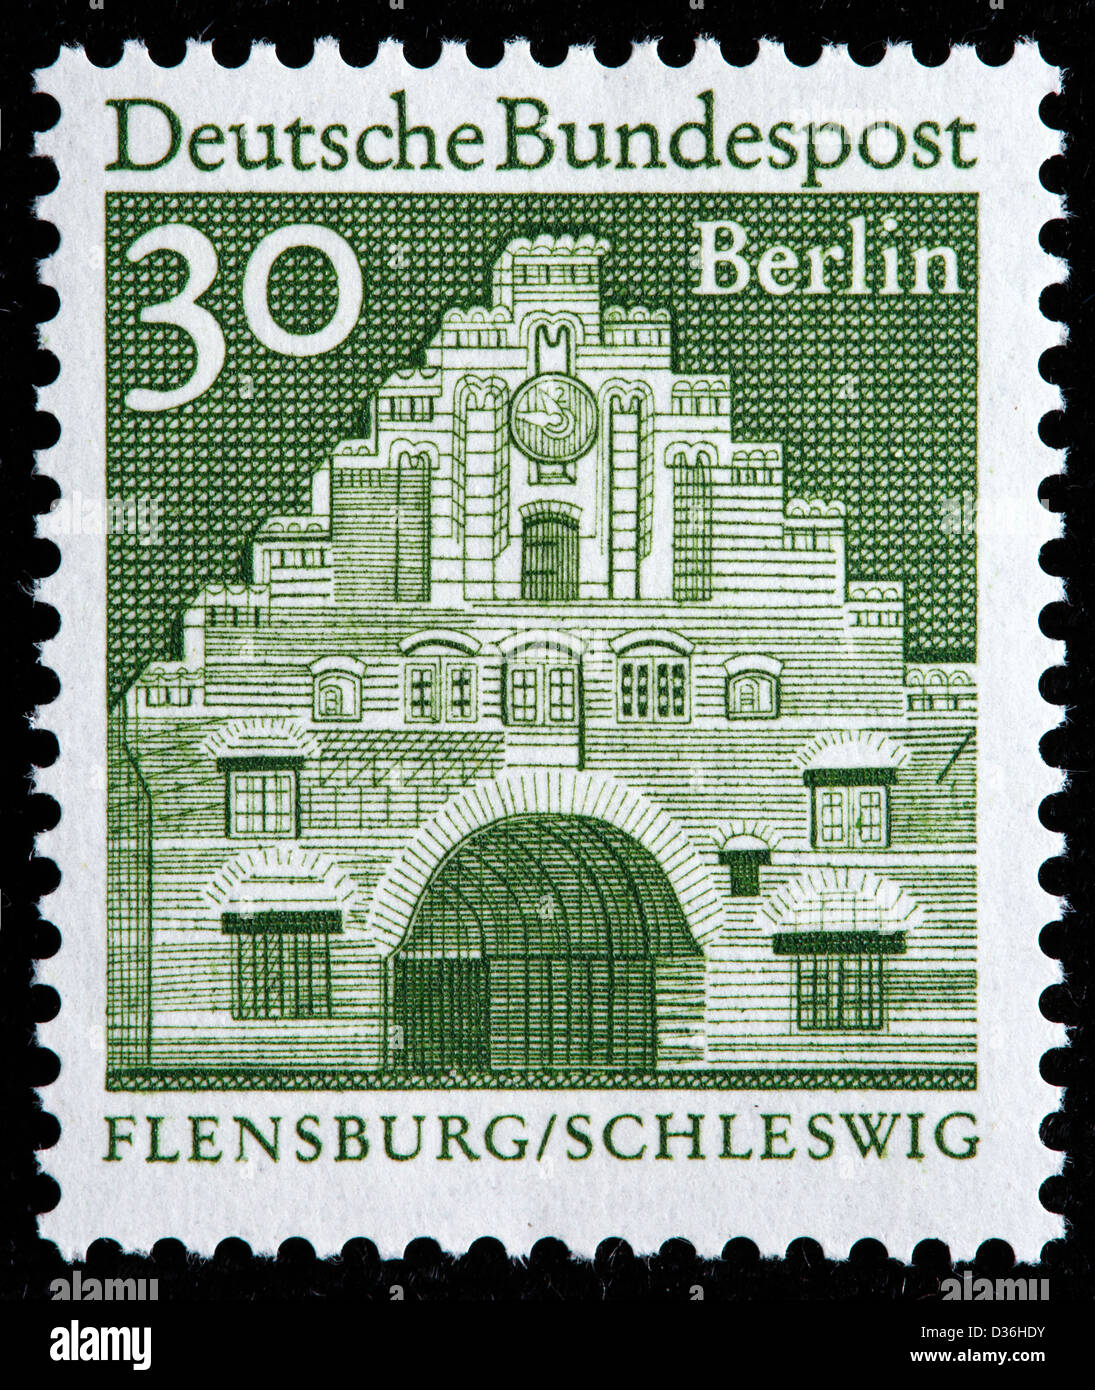 Nordertor, Flensburg, Schleswig-Holstein, postage stamp, Germany, 1966 Stock Photo